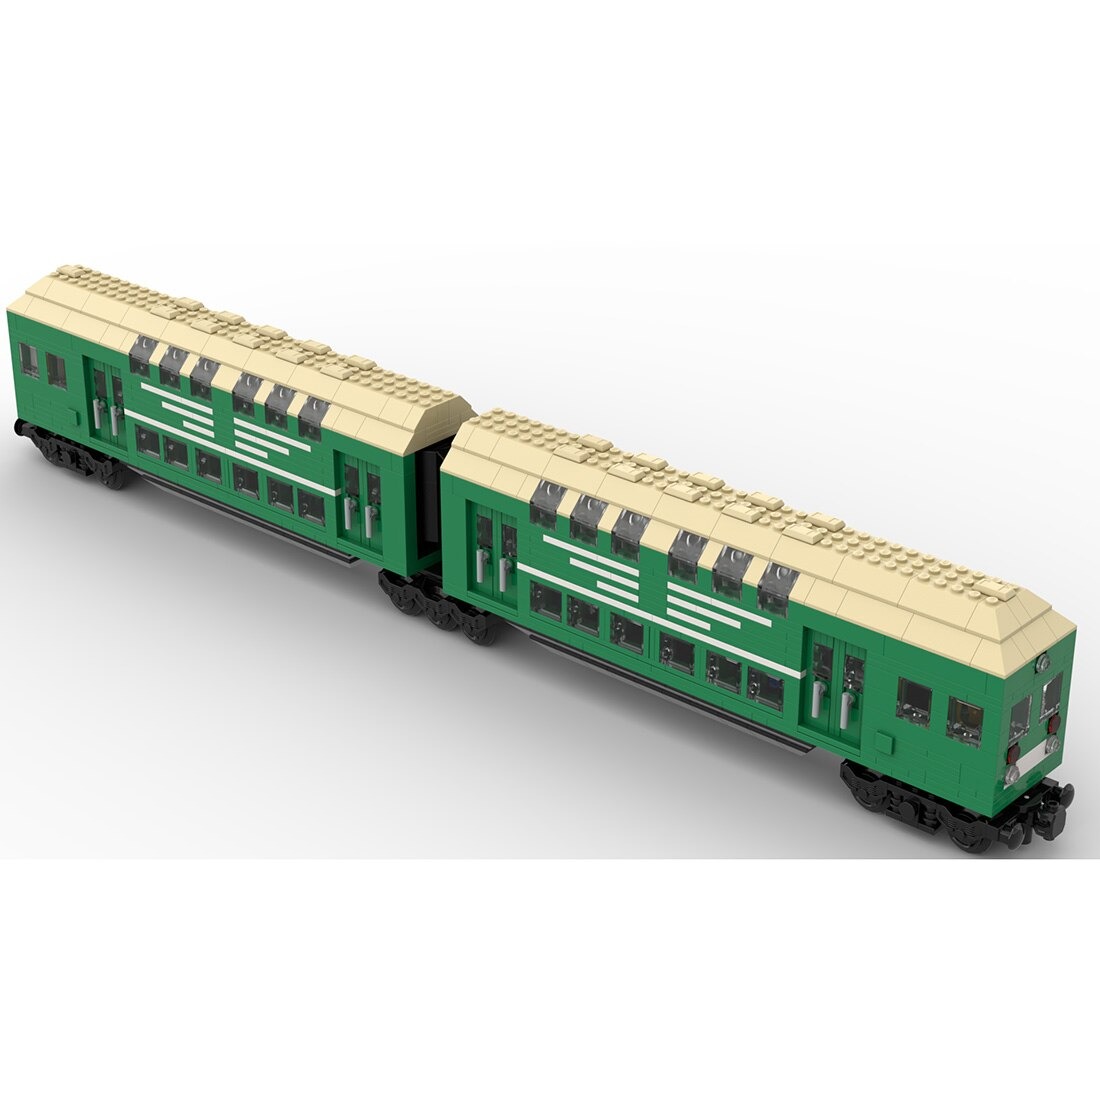 authorized moc 109281 7 axle train carri main 4 1 - CADA Block